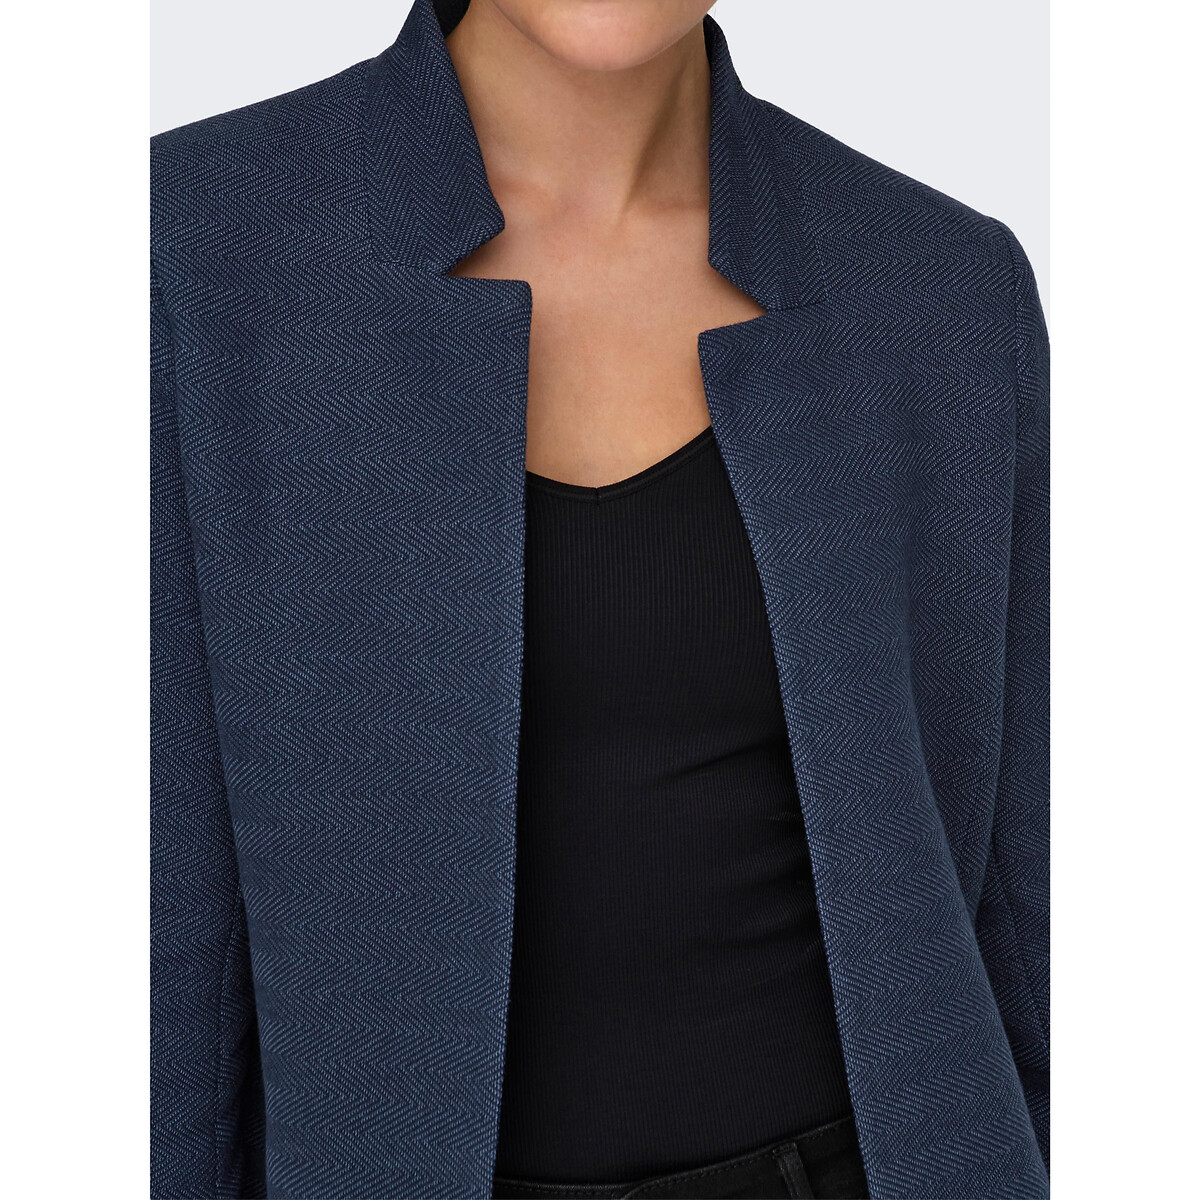 Пальто легкое без застежки  L синий LaRedoute, размер L - фото 4